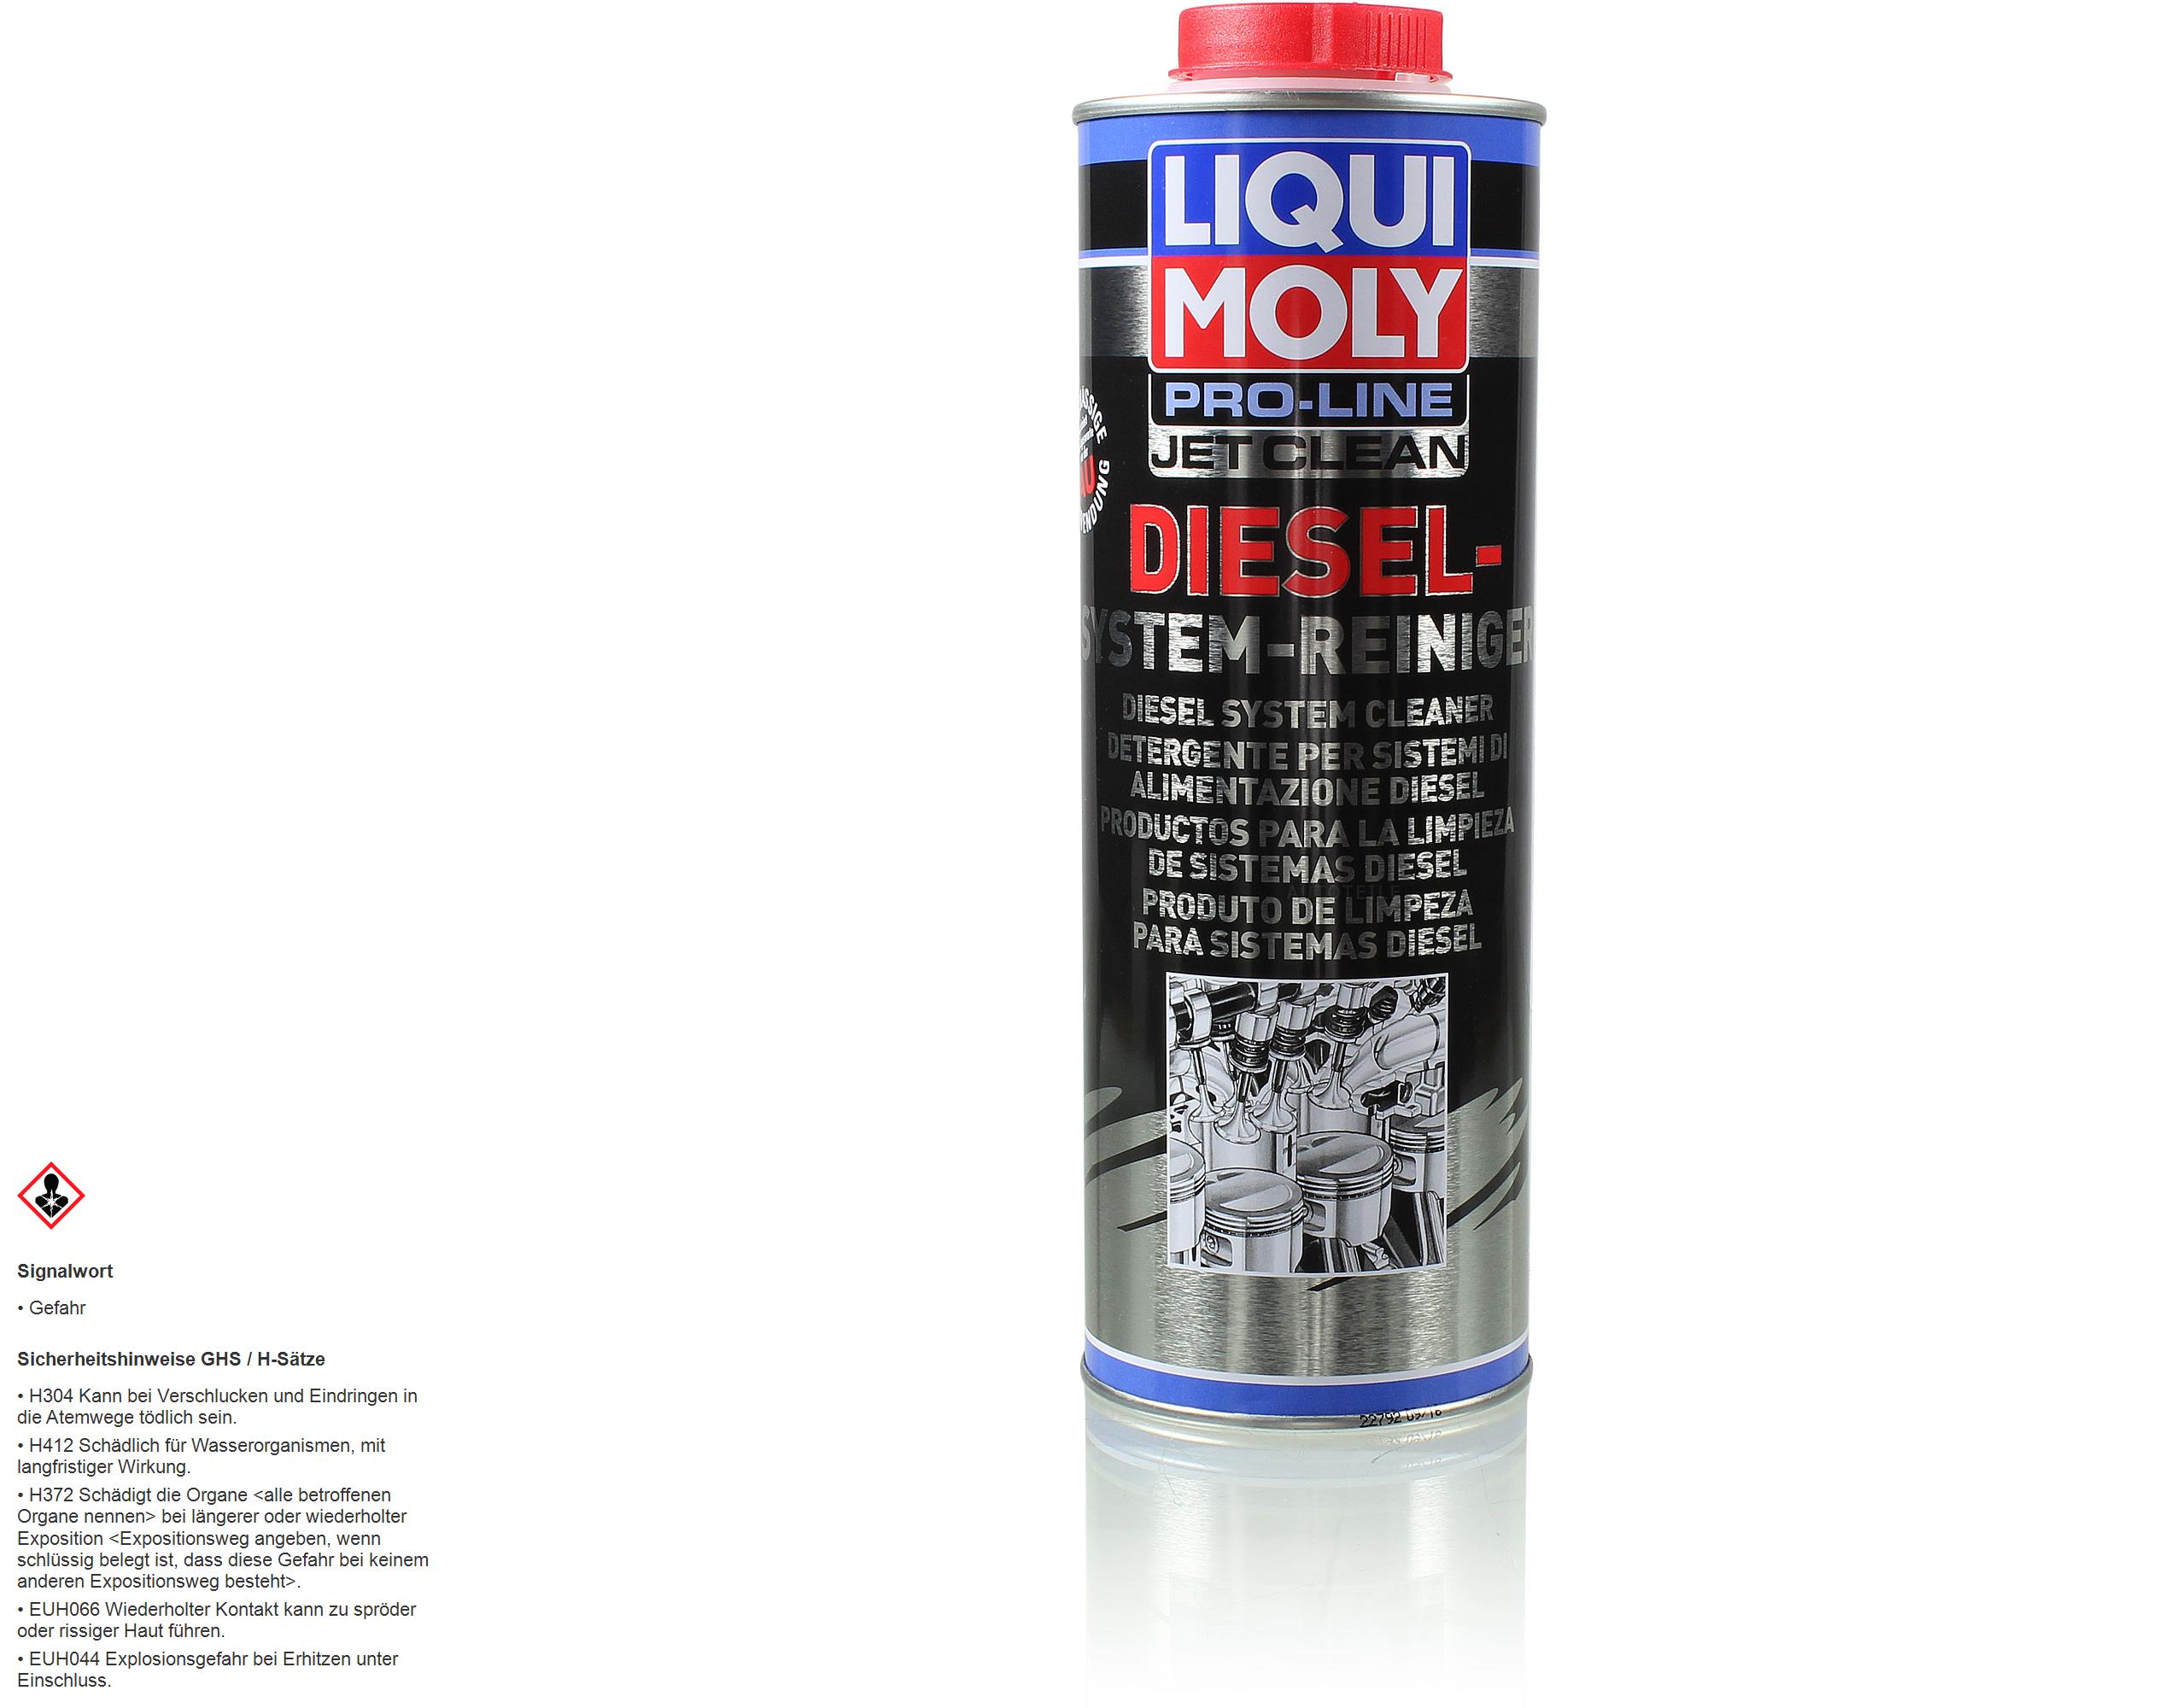  LIQUI MOLY 5149 Pro Line JetClean Diesel System Reiniger Dose Blech 1L